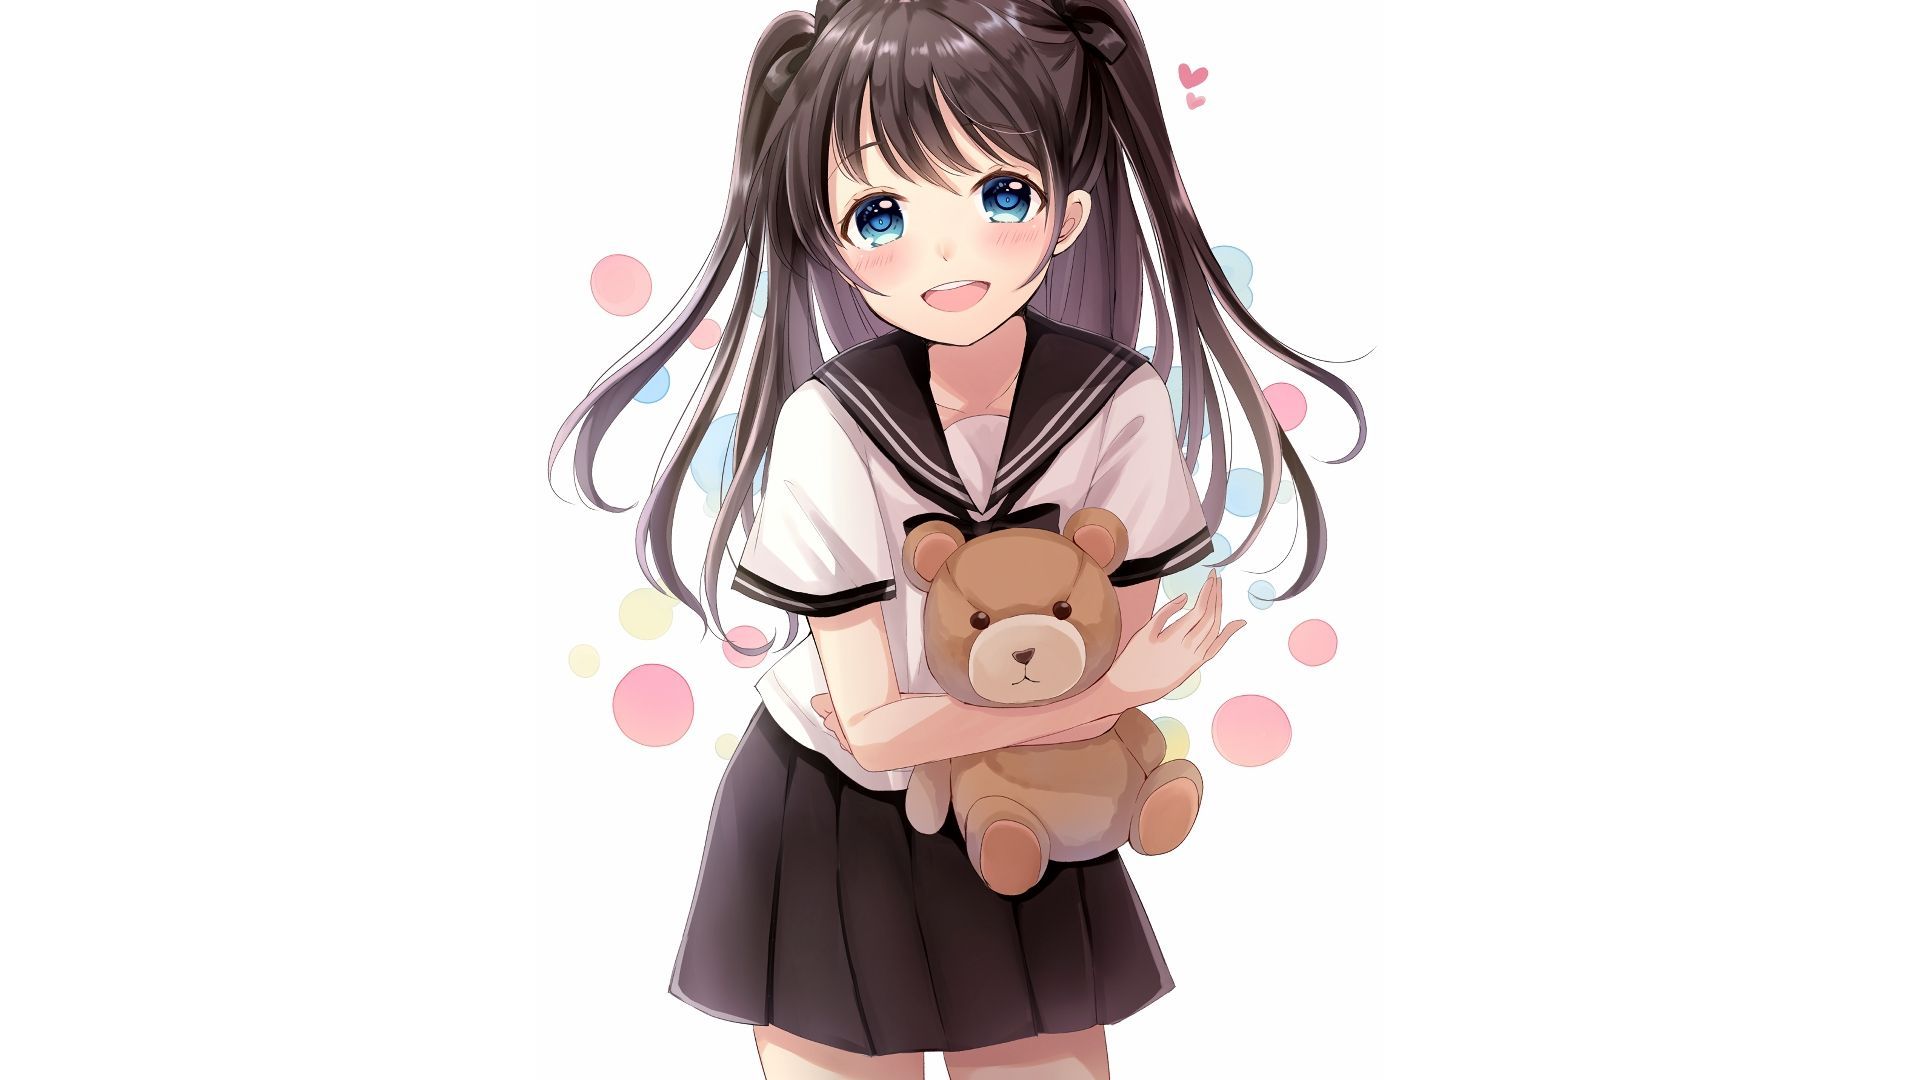 Desktop Wallpaper Cute Girl Anime, Teddy Bear, Original, HD Image, Picture, Background, Debf11